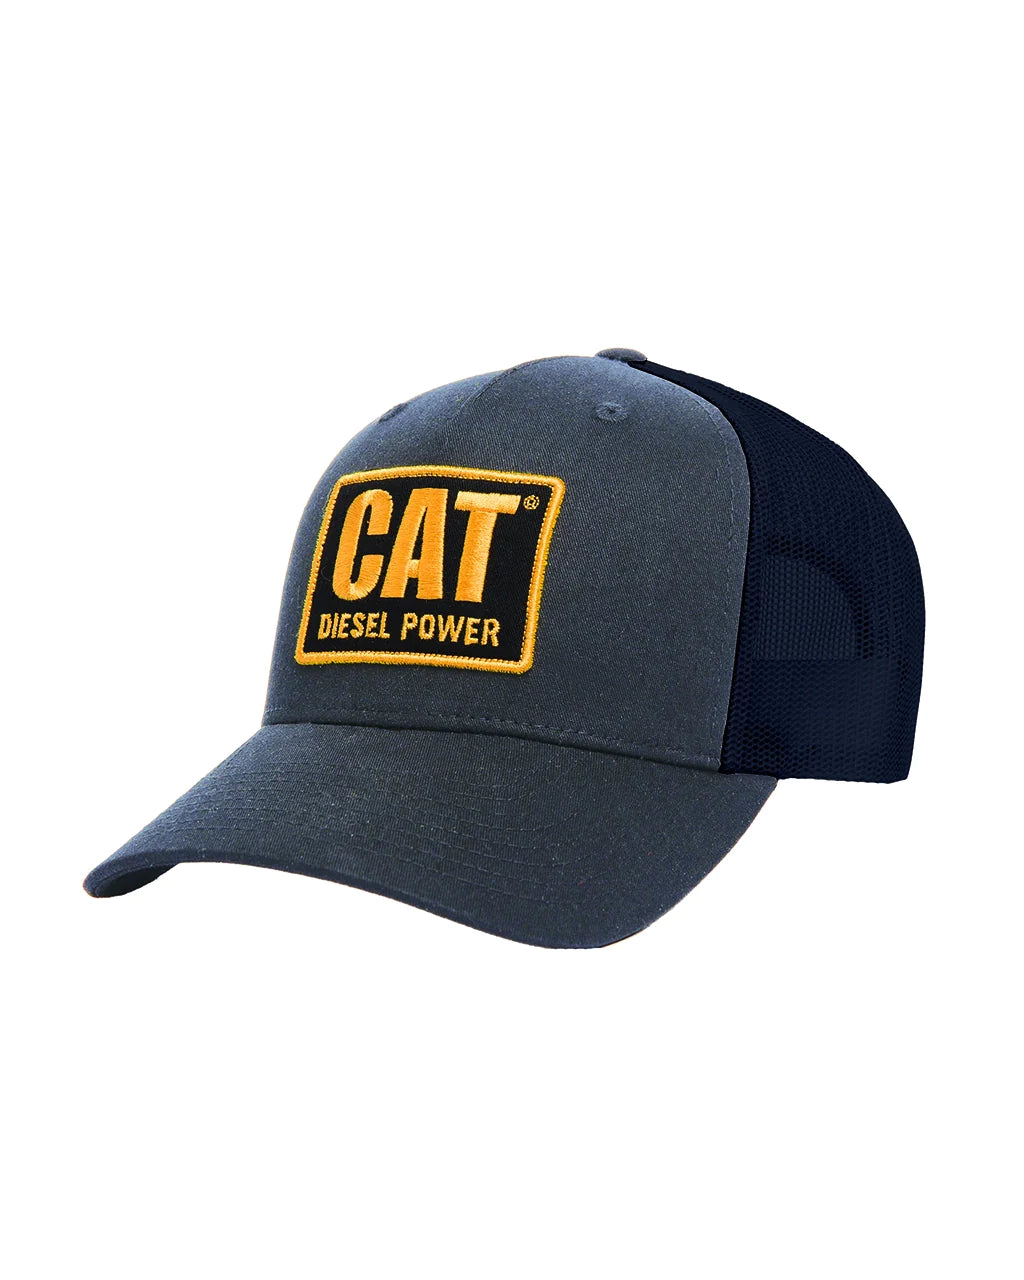 Cat X Richardson 112 Diesel Power Trucker Hat - Magnet